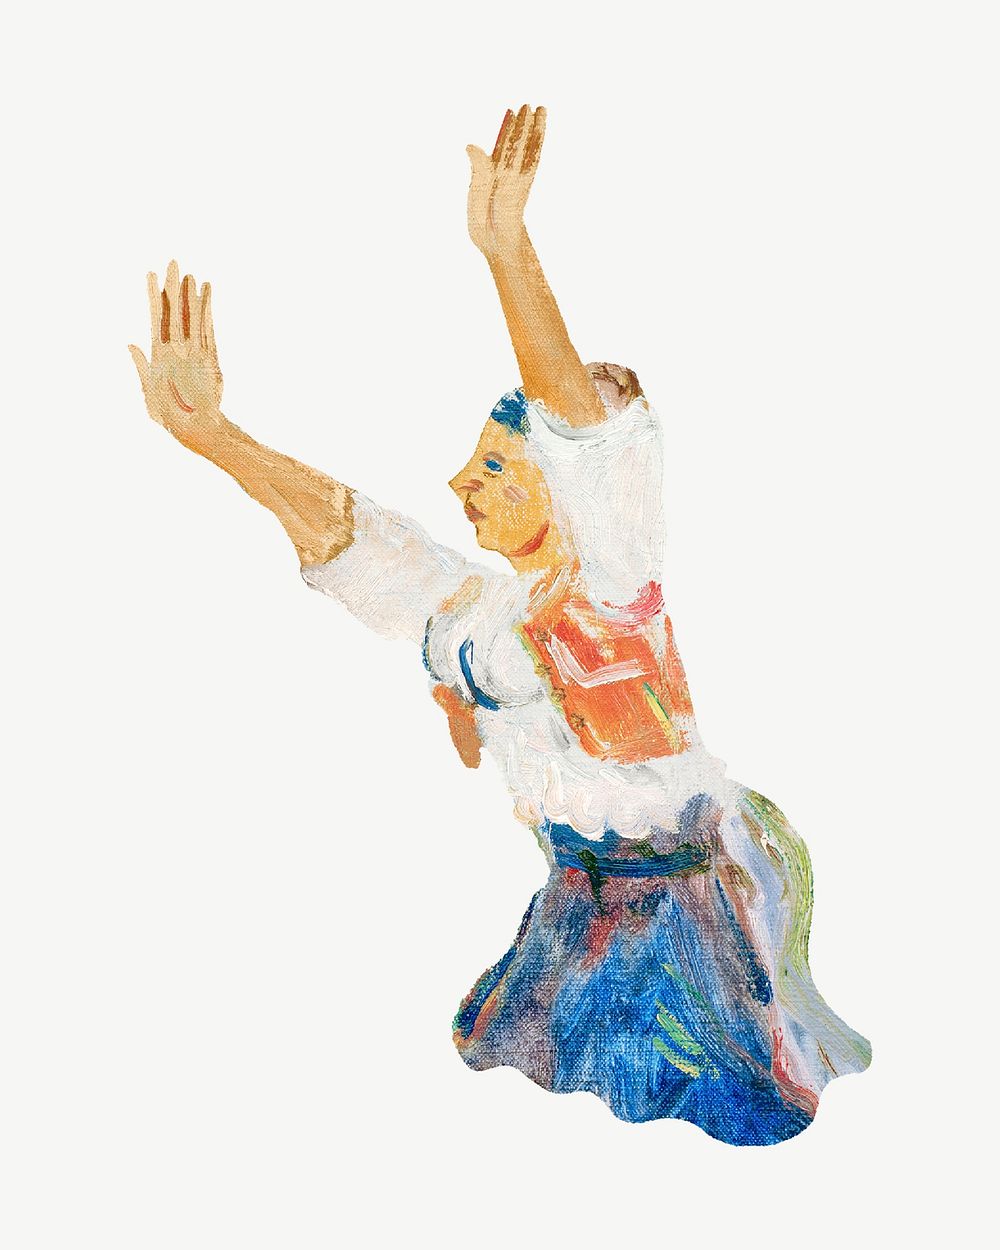 Praying woman, vintage illustration psd by Cyprian Majernik. Remixed by rawpixel.